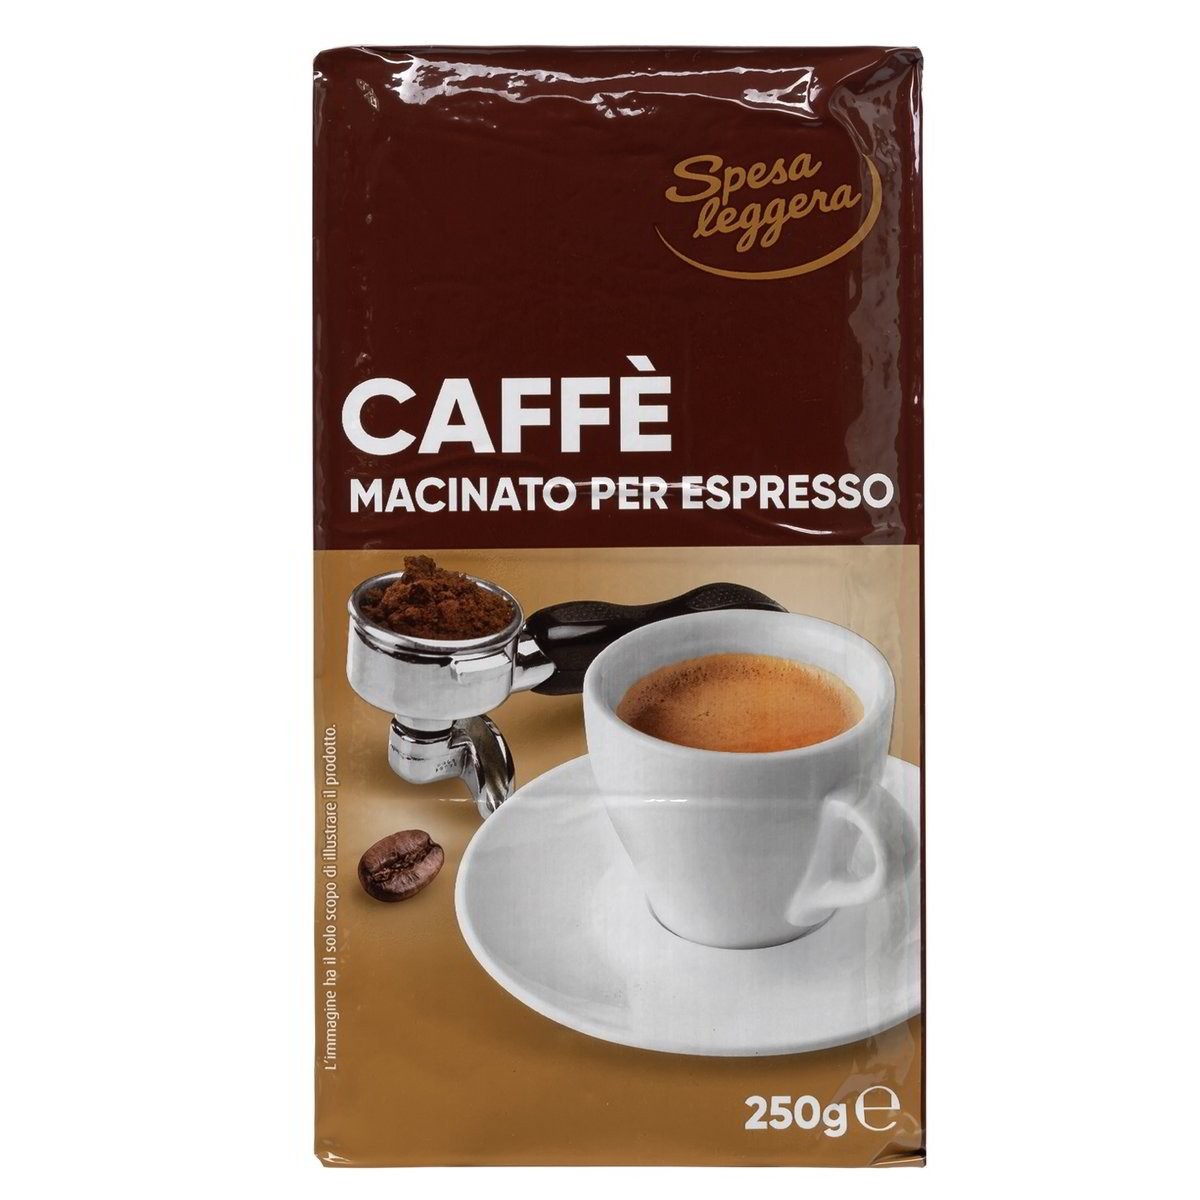 Spesa Leggera Caffè espresso